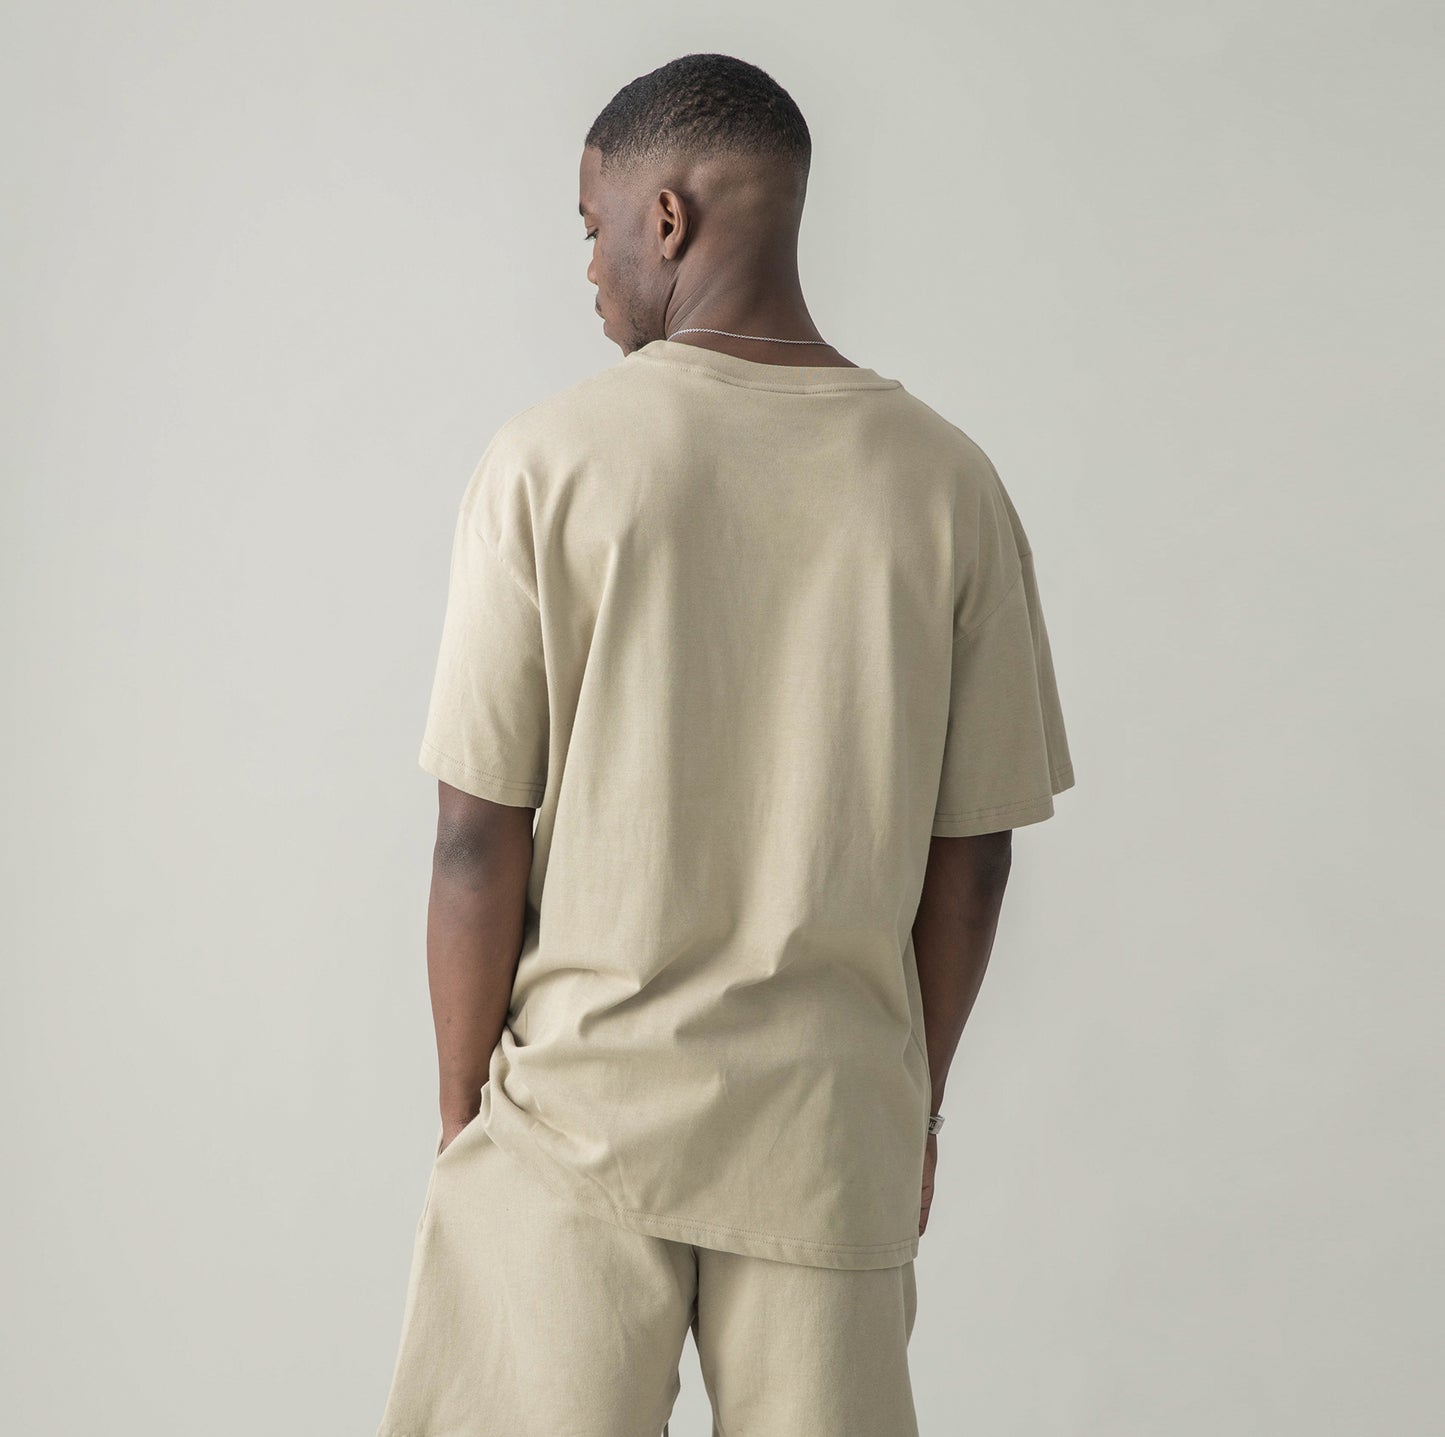 Back view of model in $MILE (BACK PRINT) - Unisex Oversized T-shirt (CAMEL)